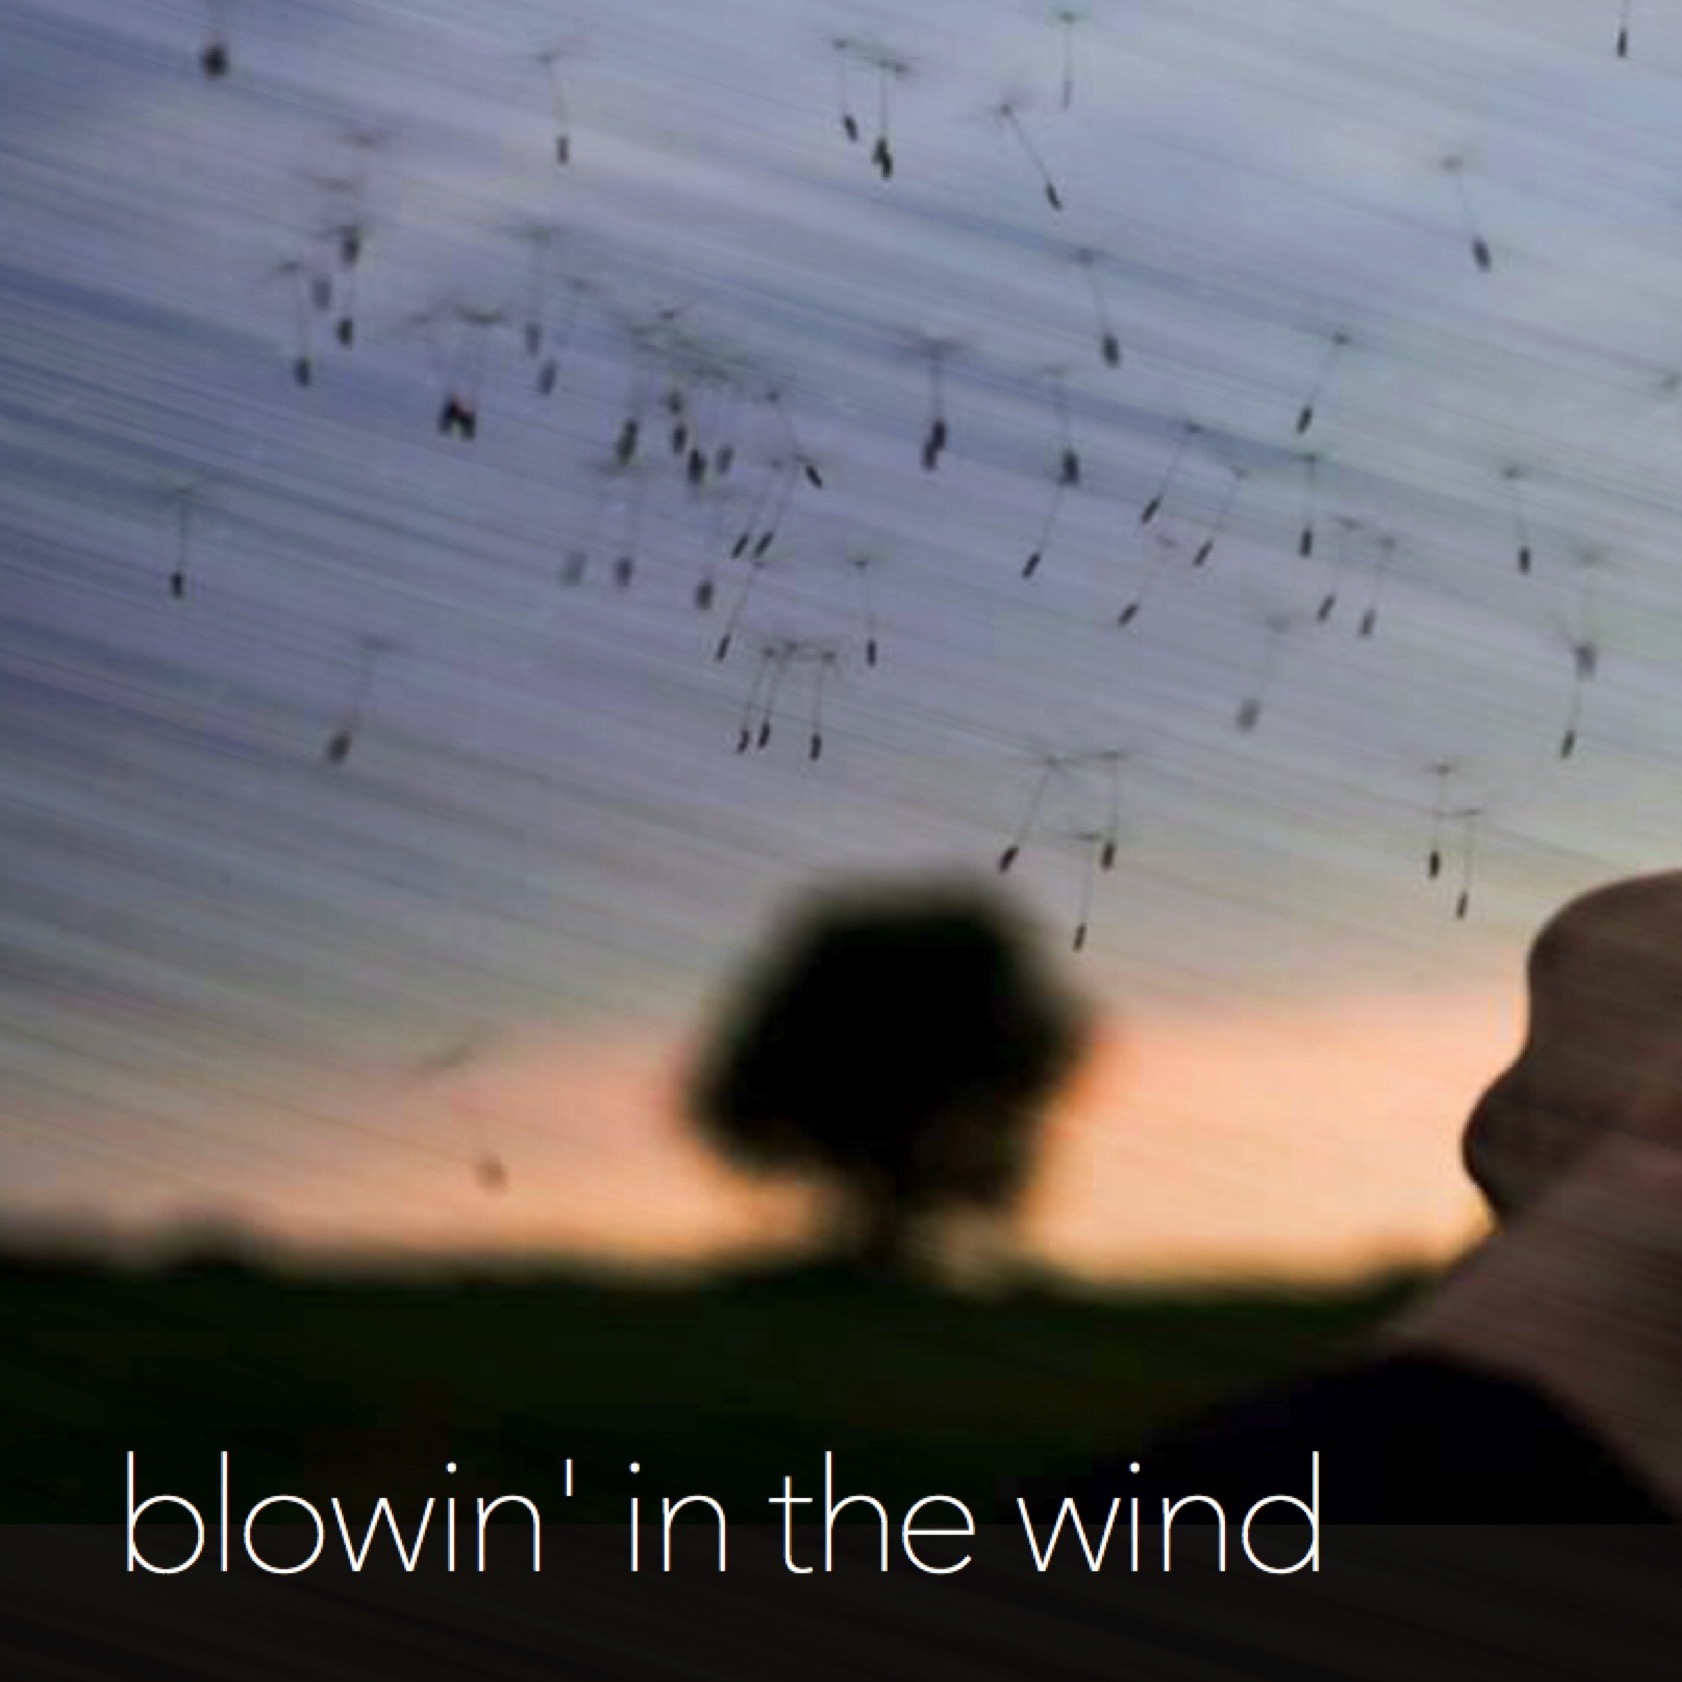 Ryan Post - "Blowin' in the Wind"